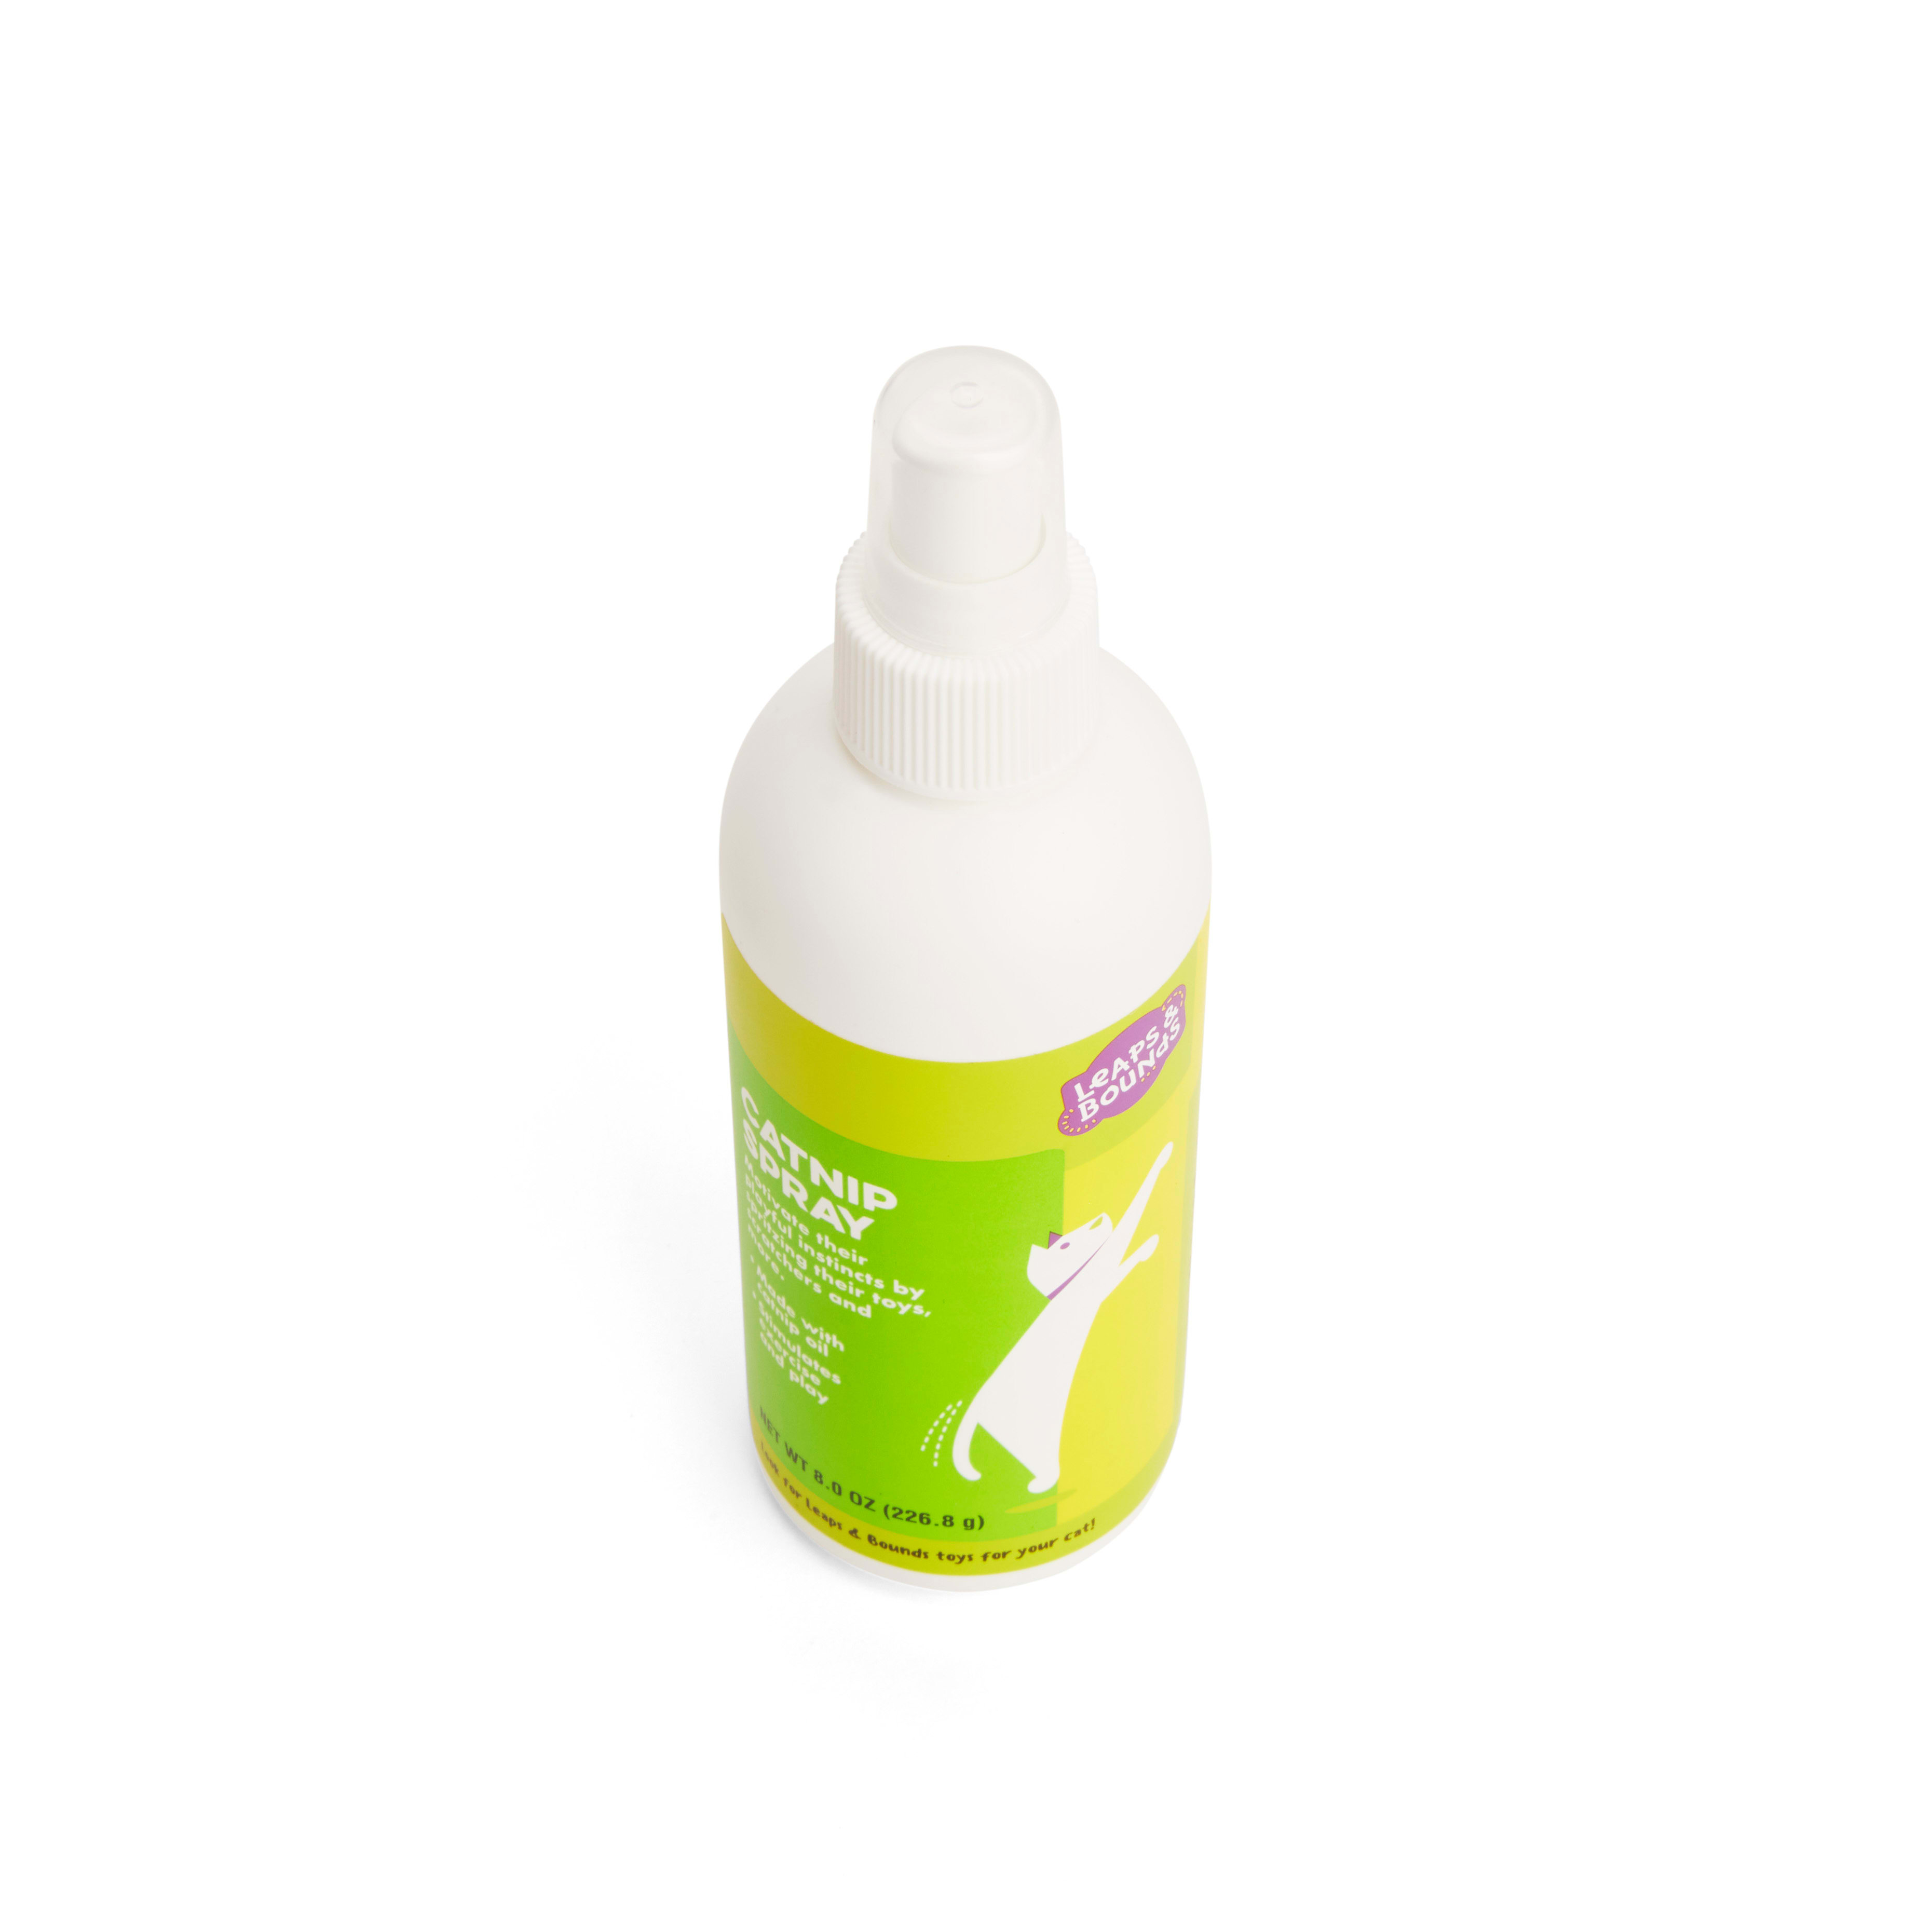 Gororong Premium Catnip Spray 4fl oz for Indoor, Outdoor Cats and Kitt